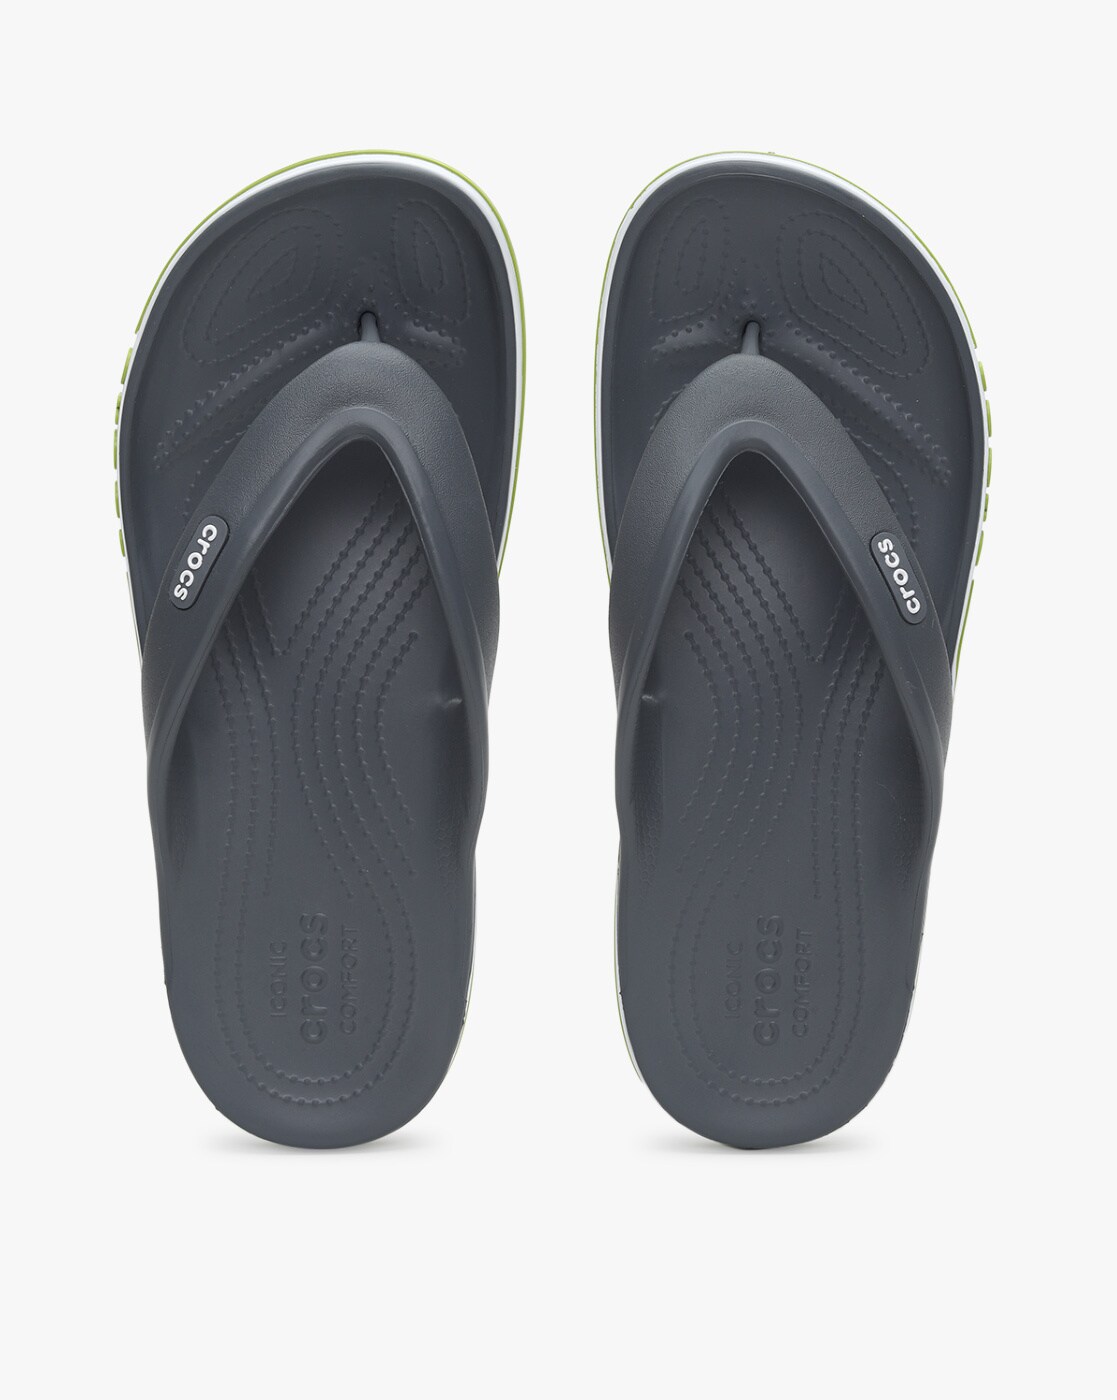 crocs thong style flip flops